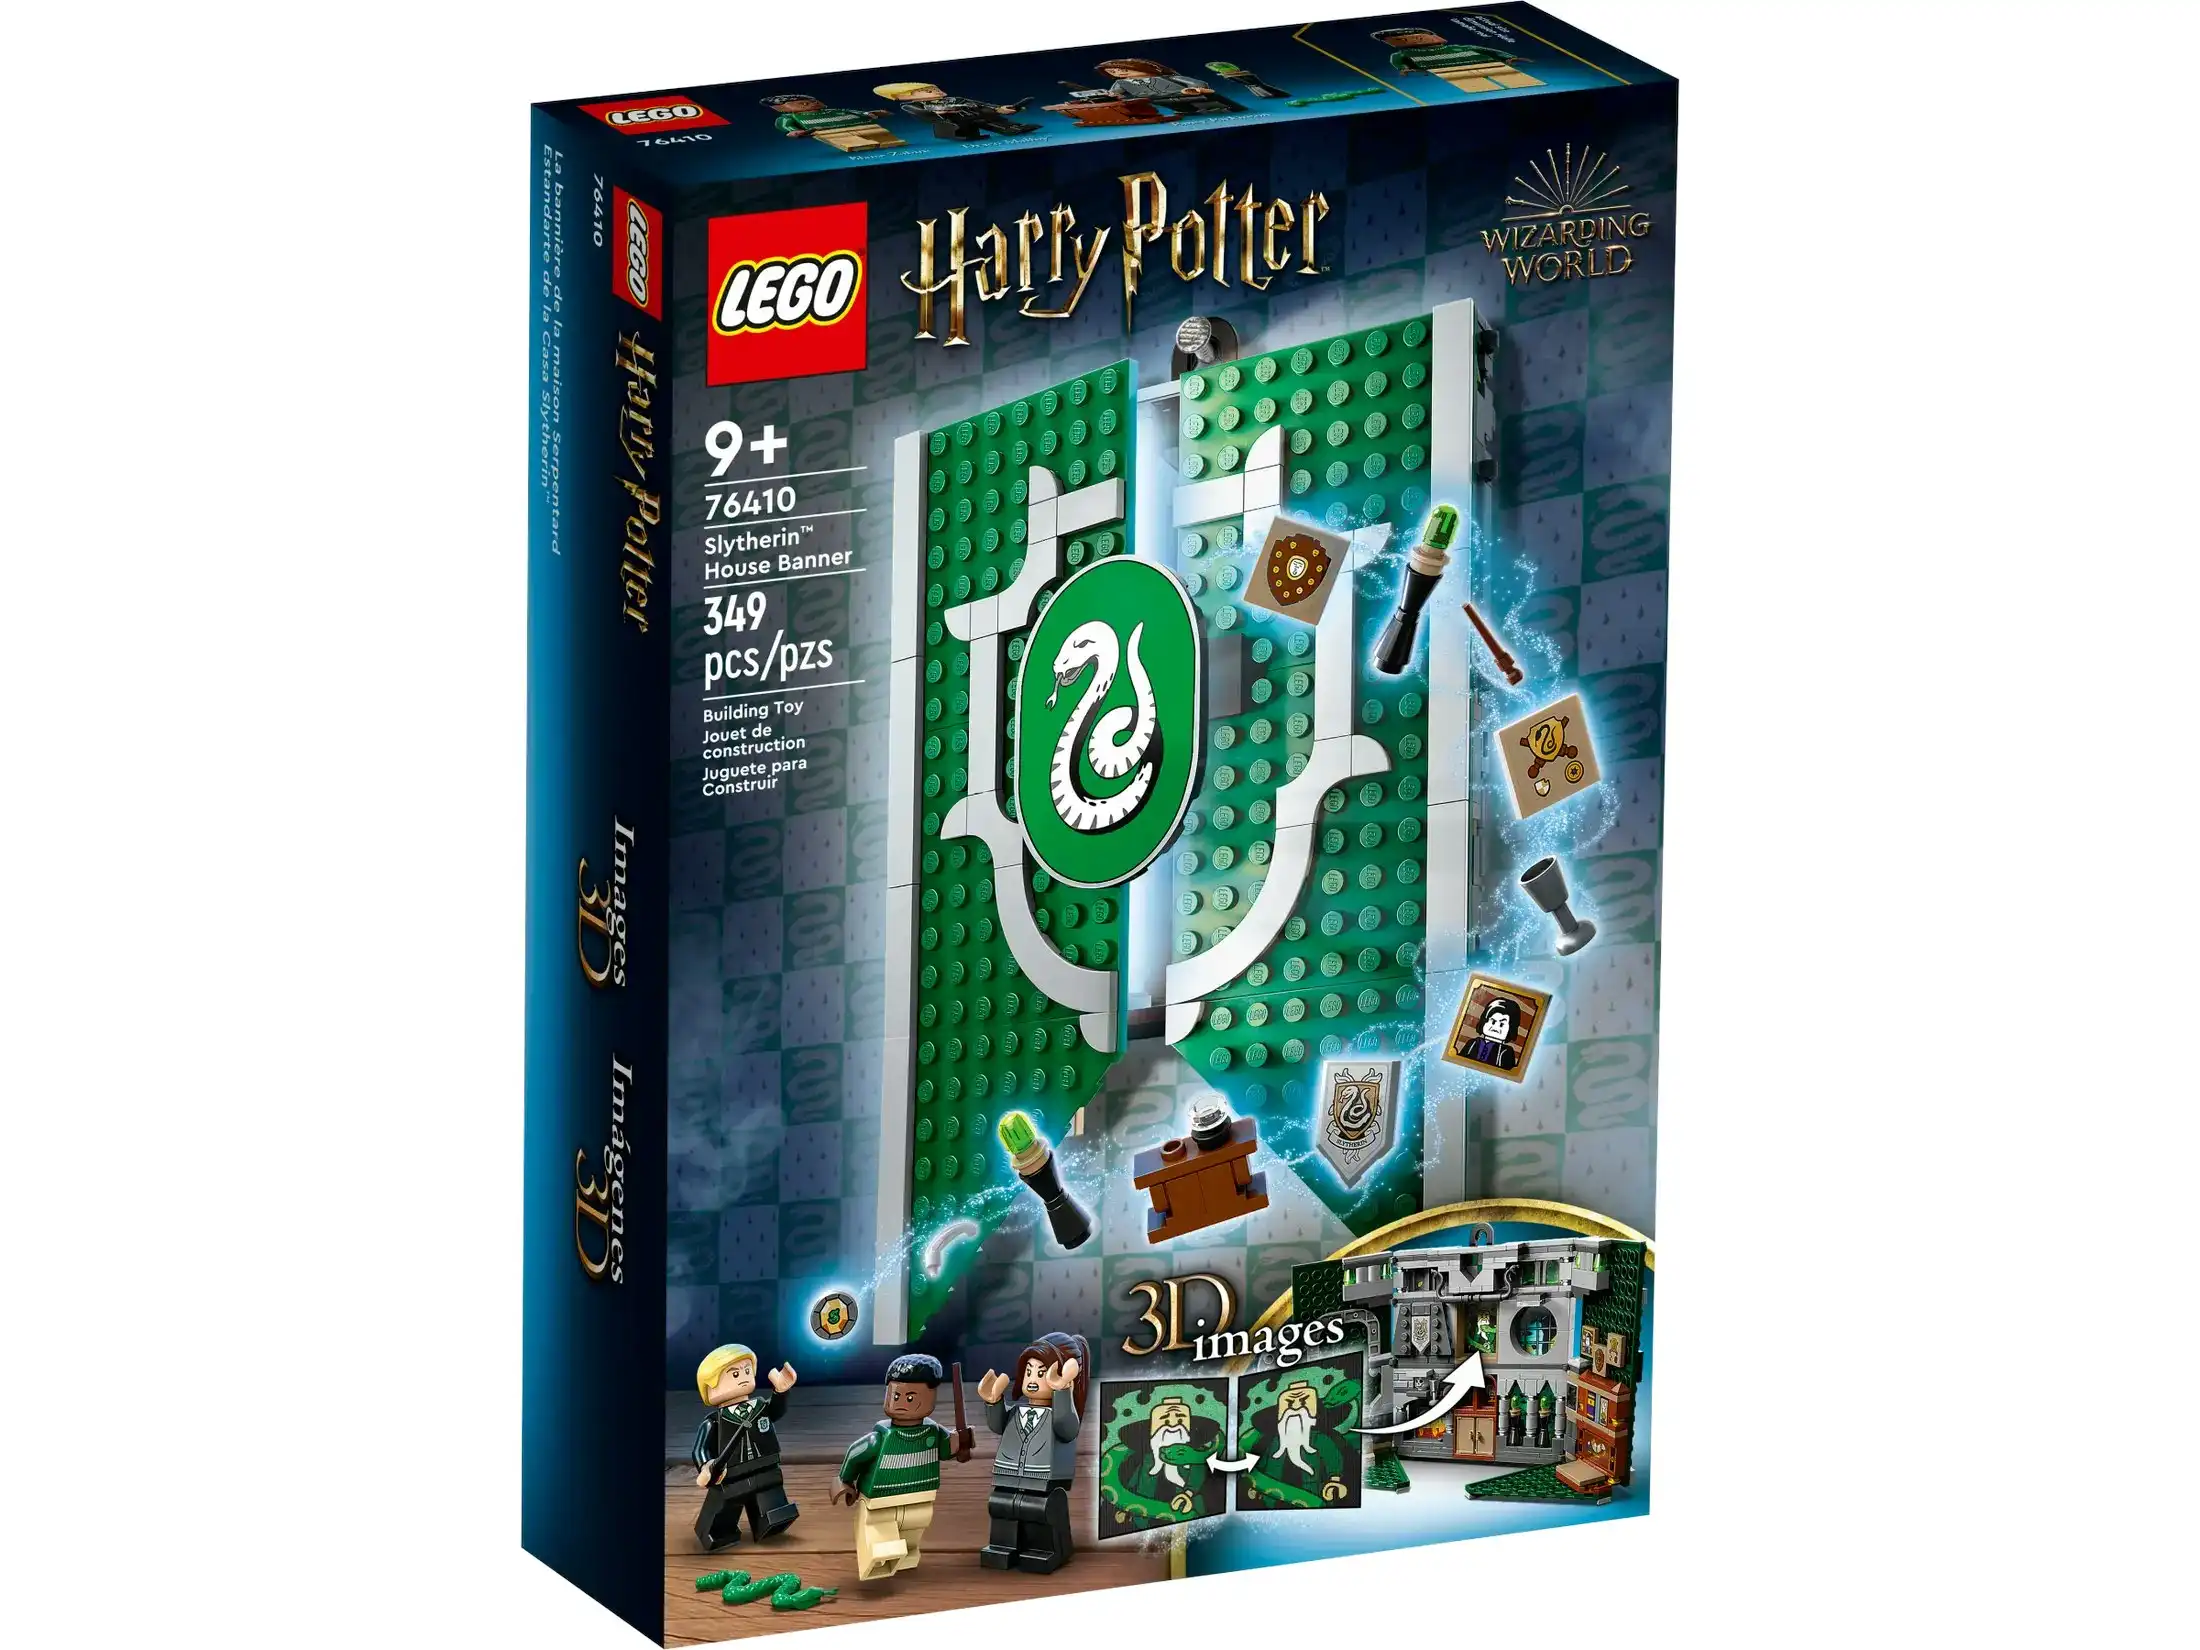 LEGO 76410 Slytherin House Banner - Harry Potter